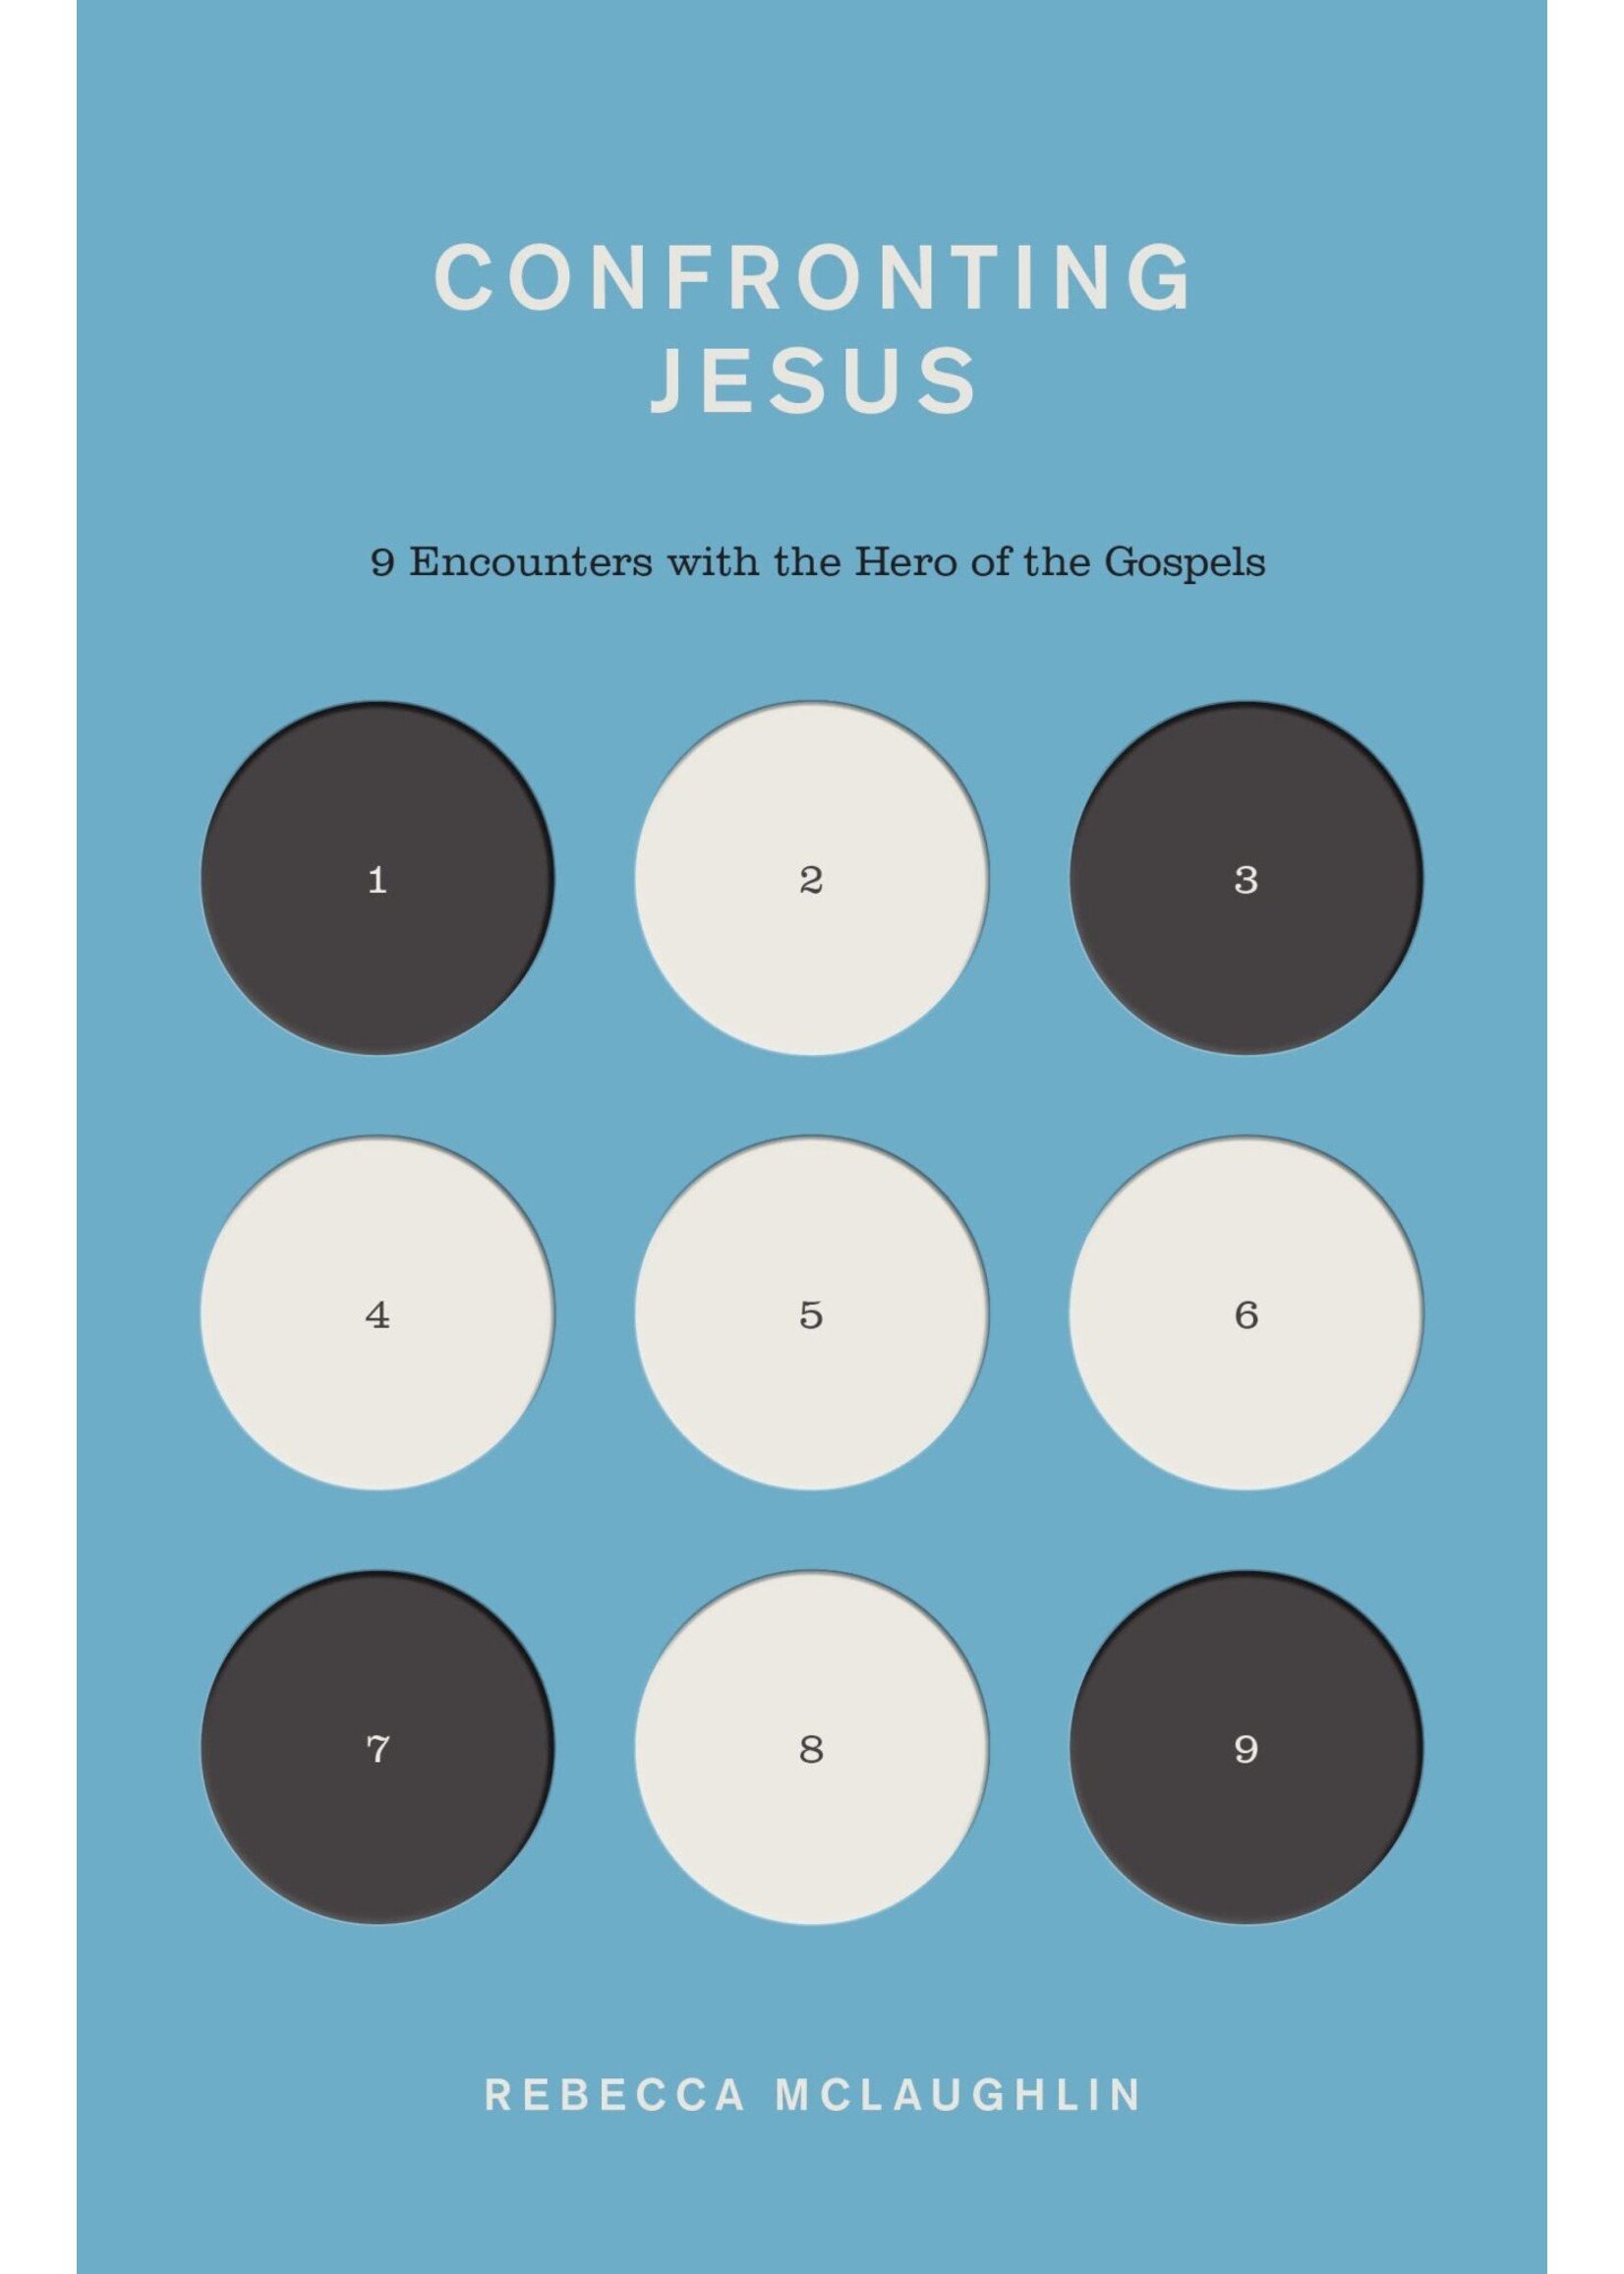 McLaughlin, Rebecca Confronting Jesus: 9 Encounters with the Hero of the Gospels [Rebecca McLaughlin]